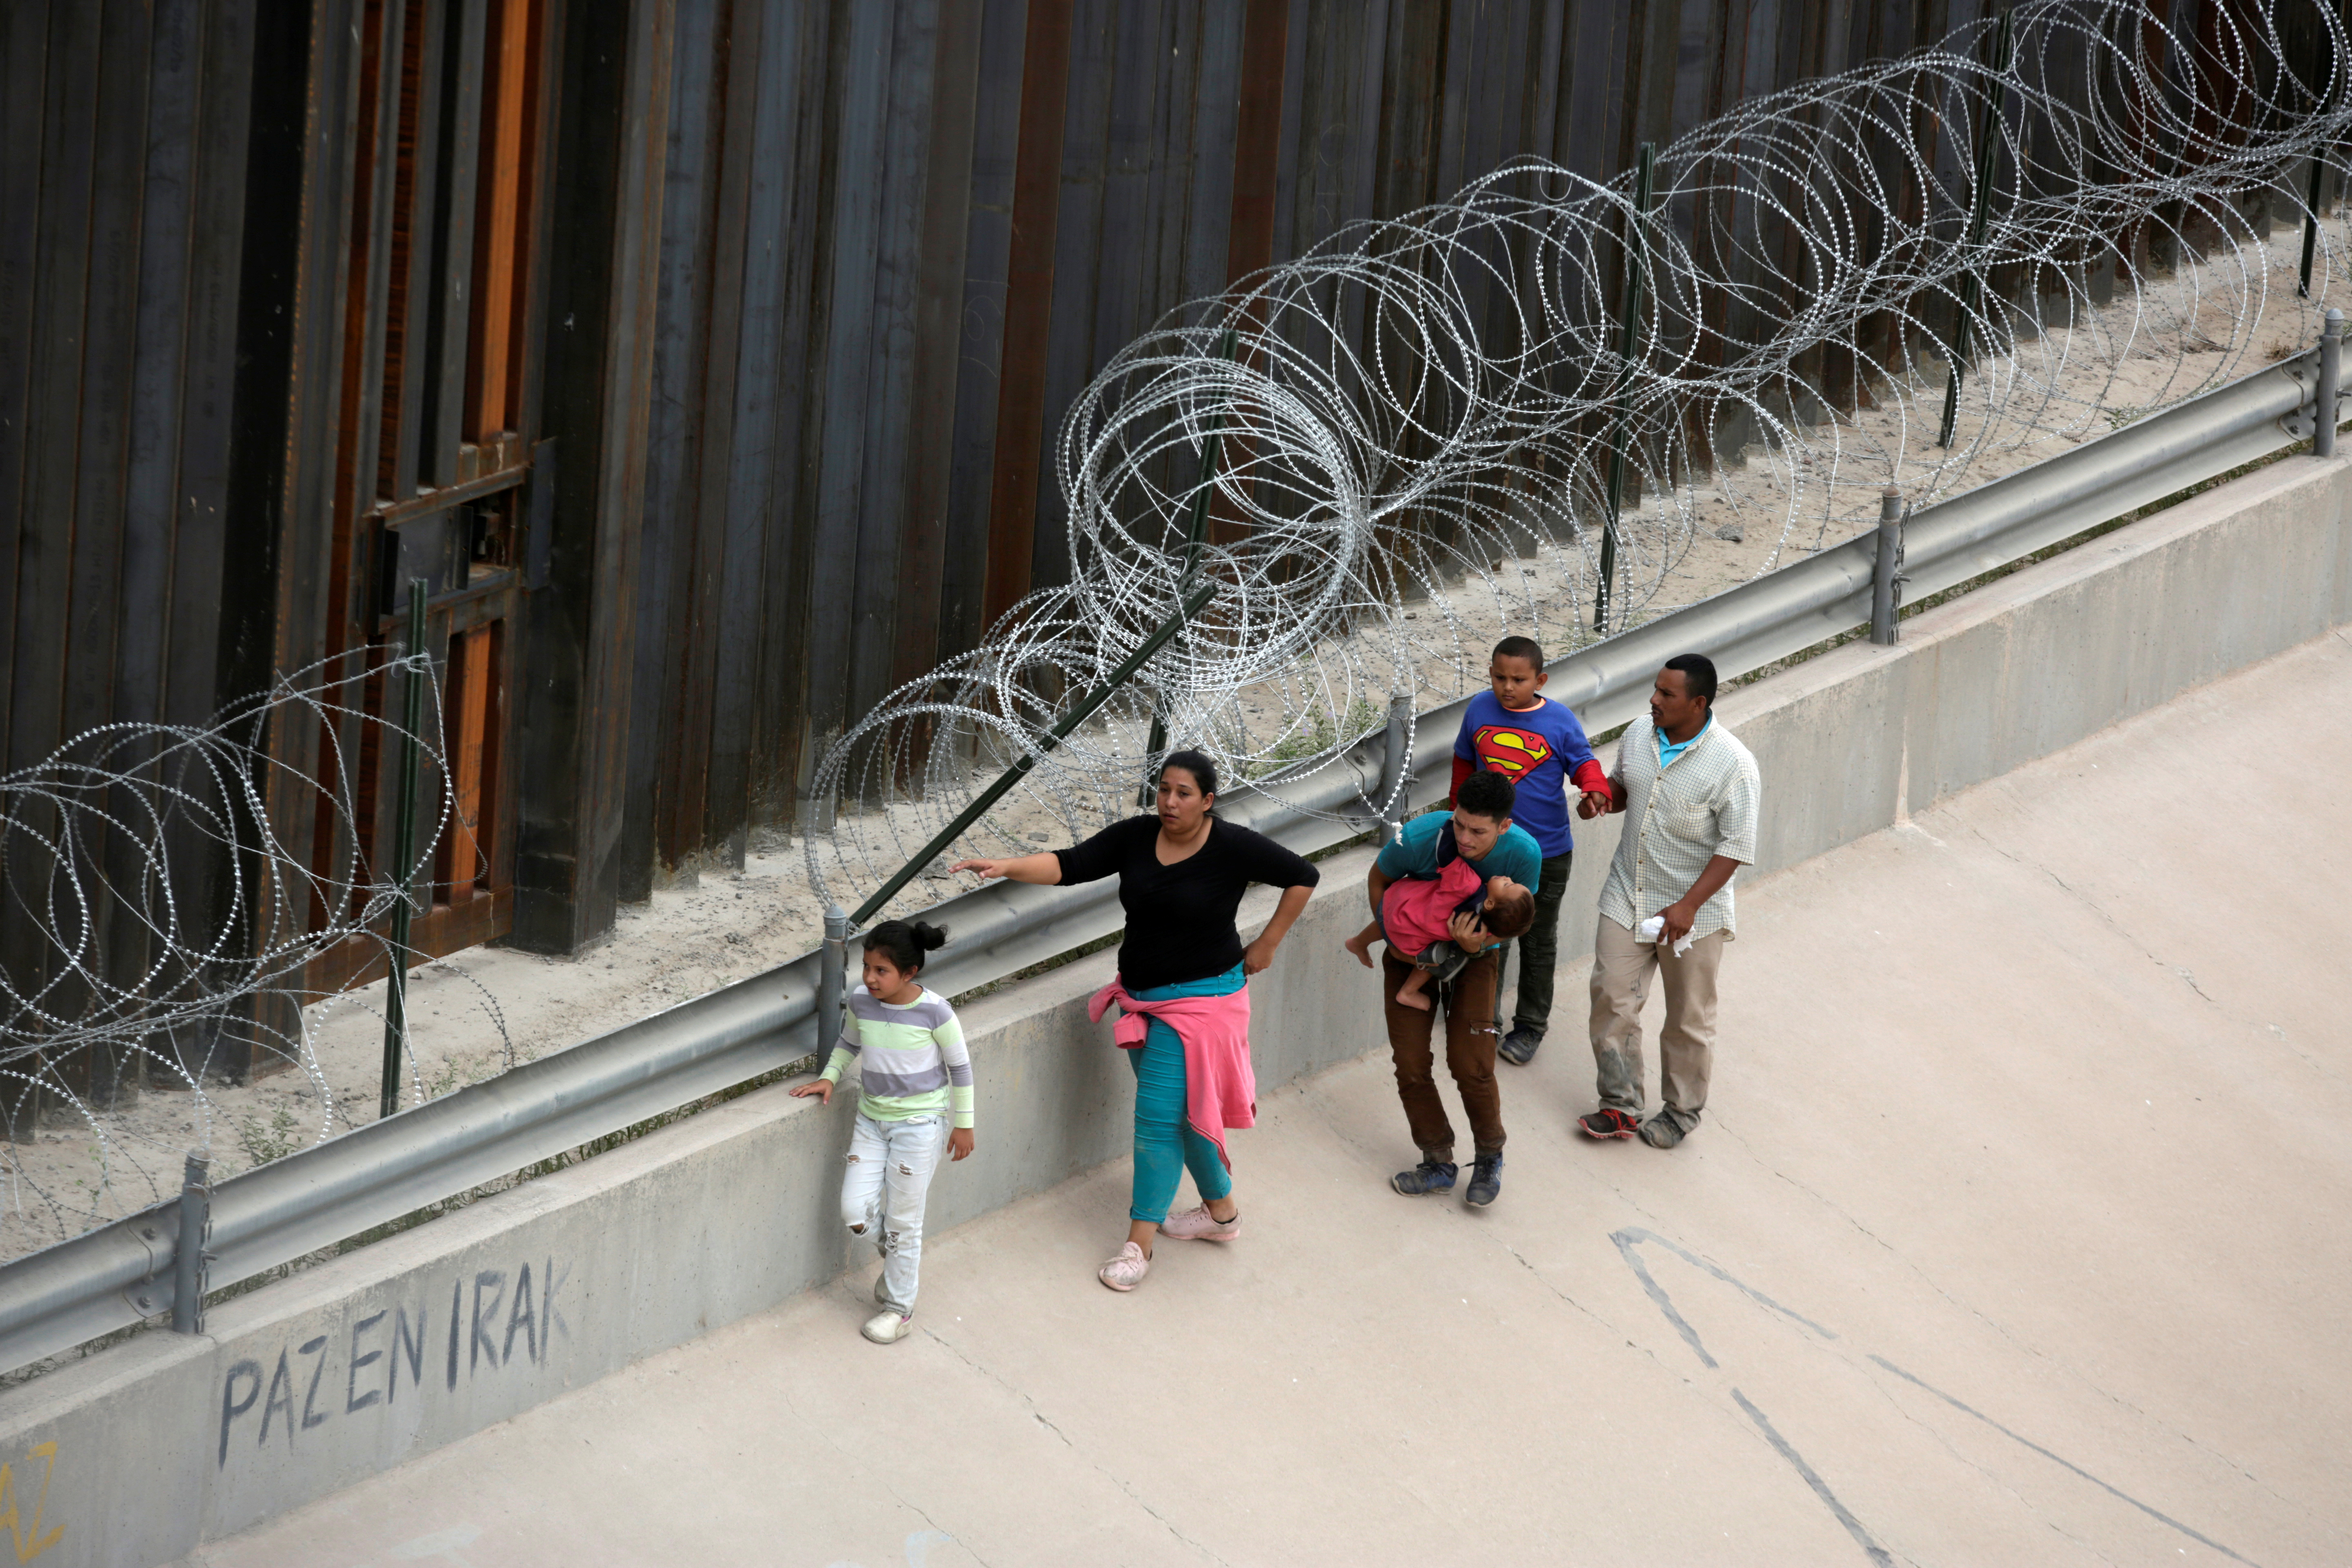 Migrants walk along the border fence after crossing illegally into El Paso, Texas, U.S. as seen from Ciudad Juarez